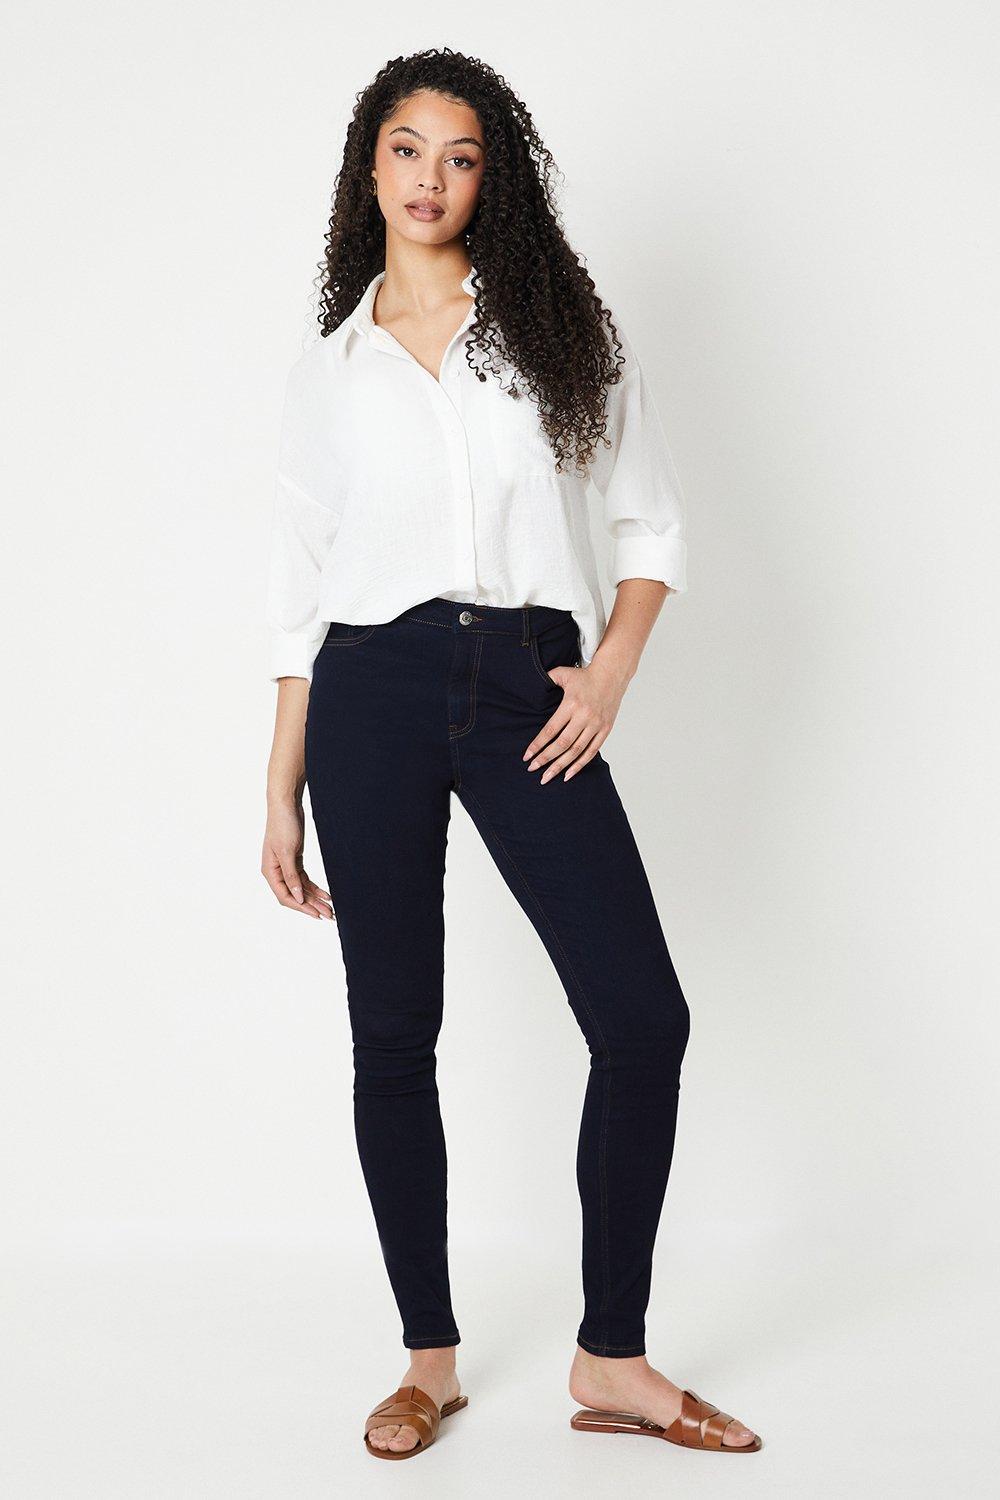 Women's Tall Comfort Stretch Skinny Jeans - indigo - 14